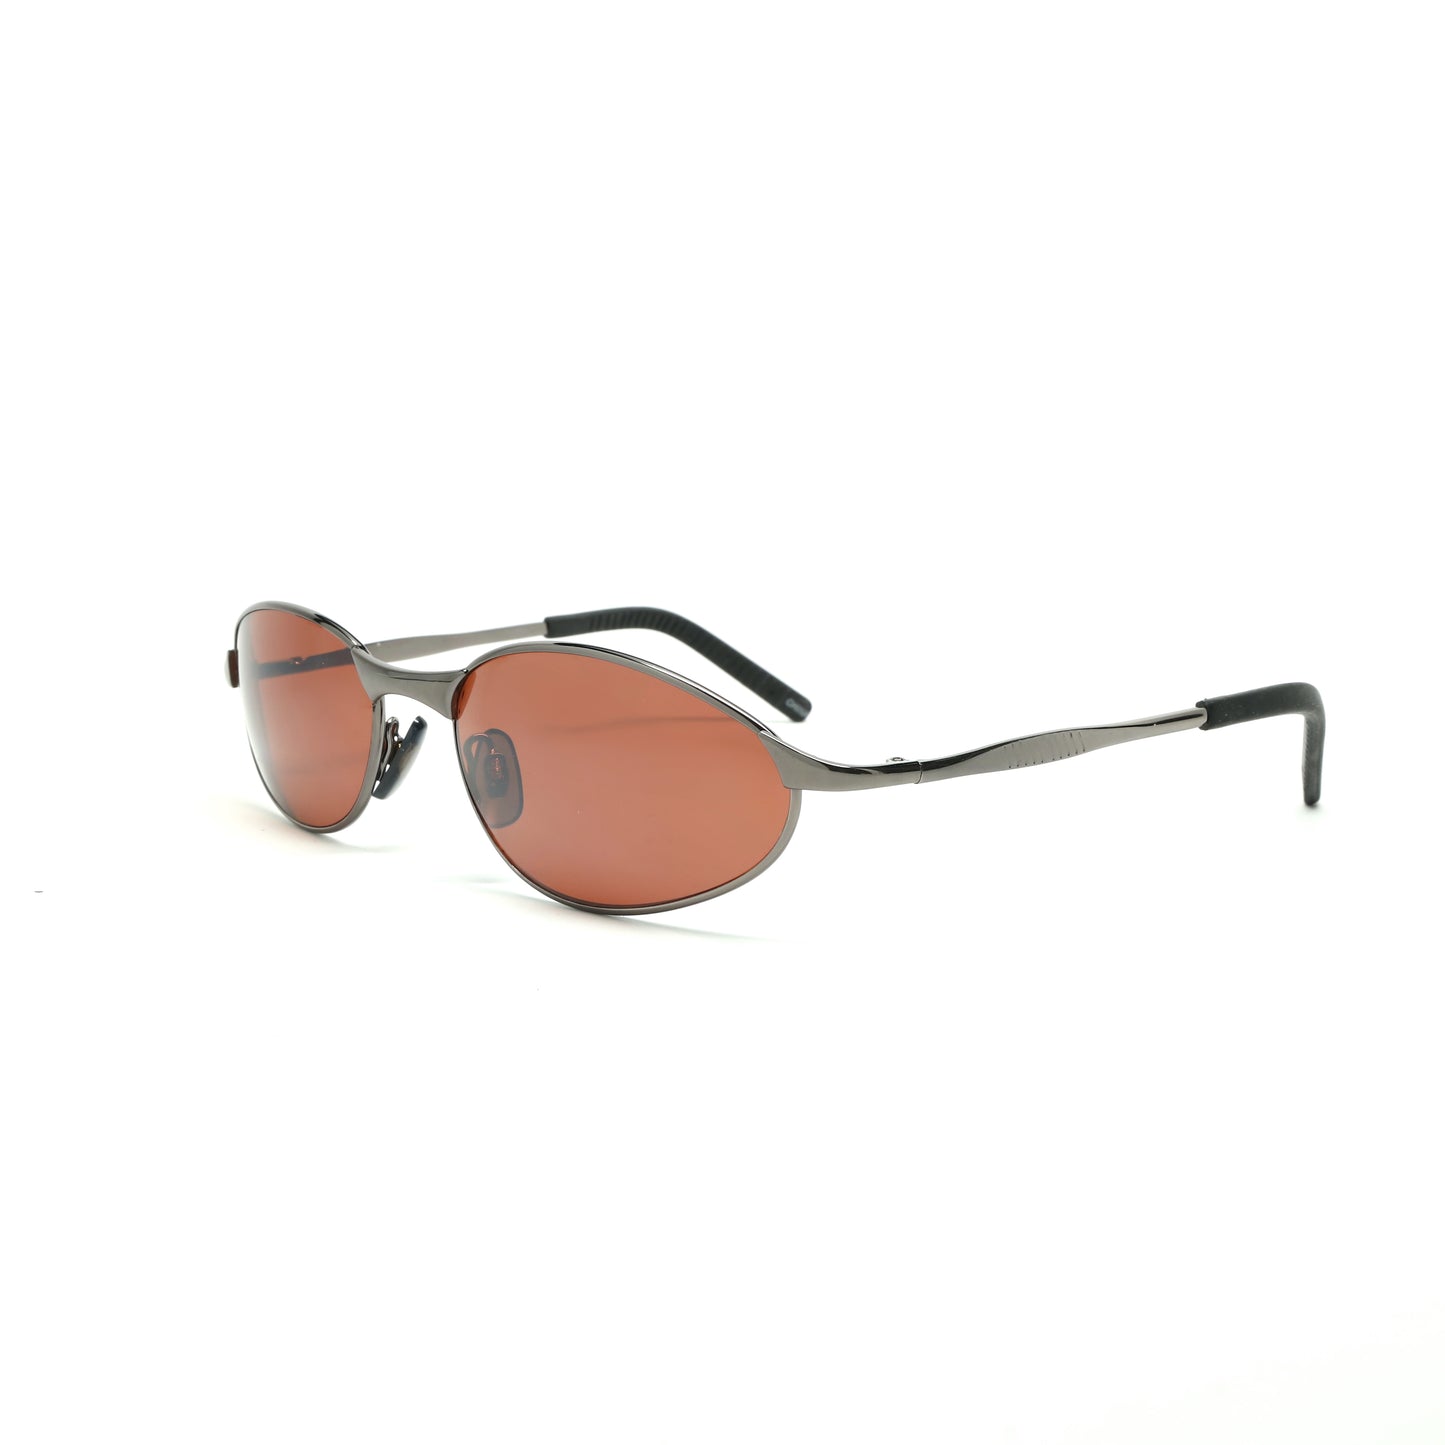 //Style 1// Vintage Standard 1997 Angled Oval Frame Sunglasses - Black